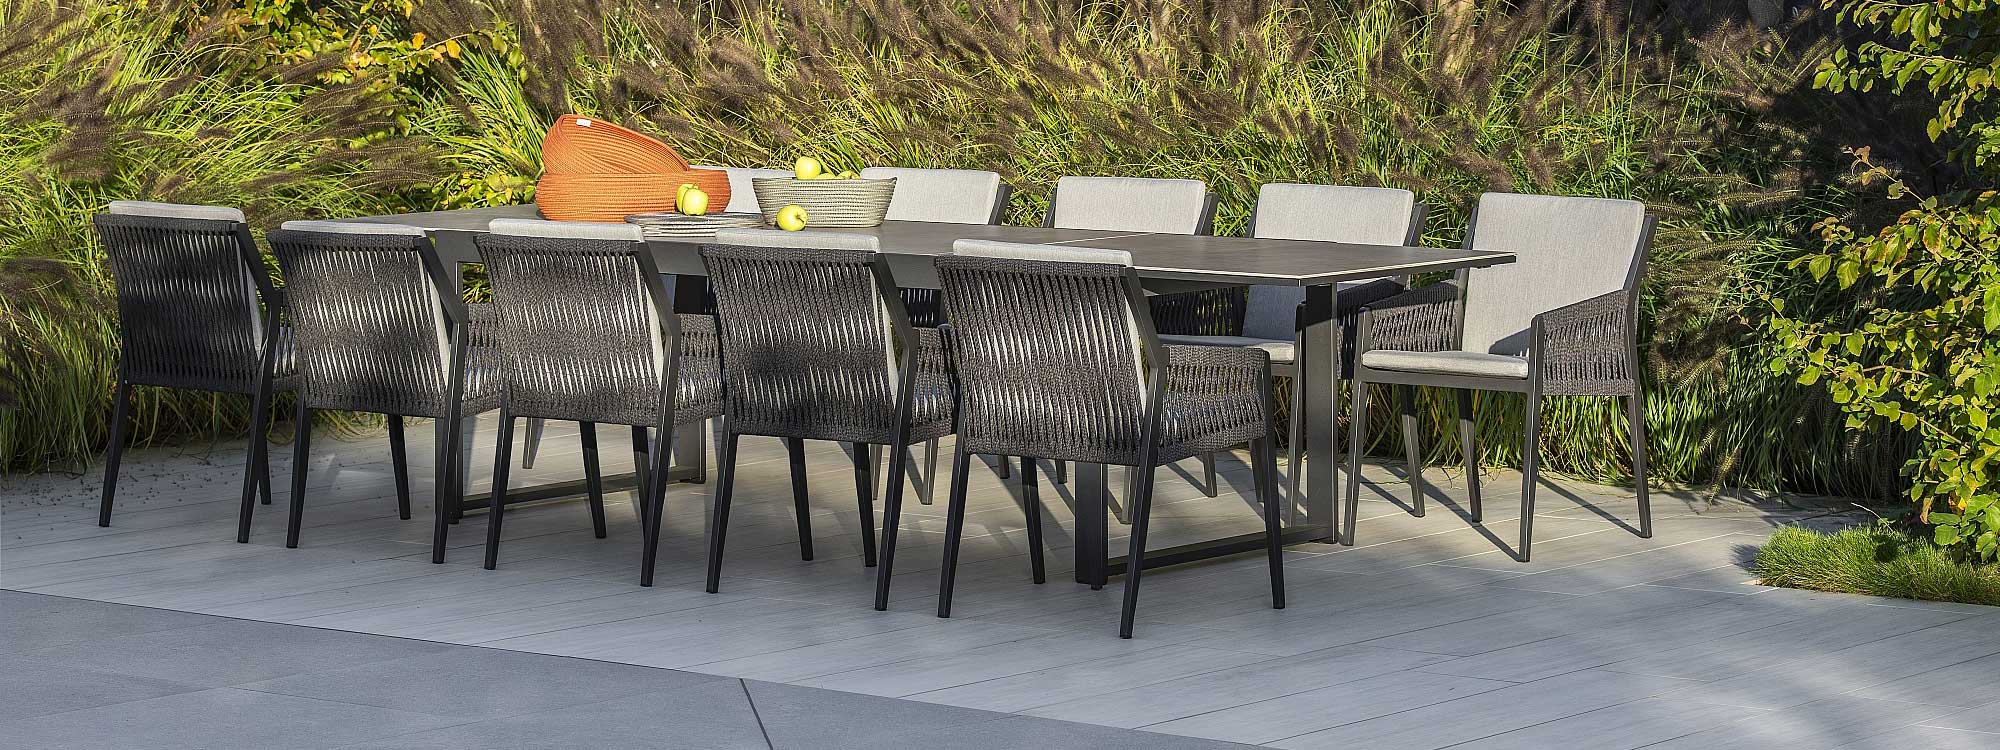 Ritz aluminium garden chair is a contemporary outdoor dining chair in low maintenance garden furniture materials by Jati & Kebon, Belgium